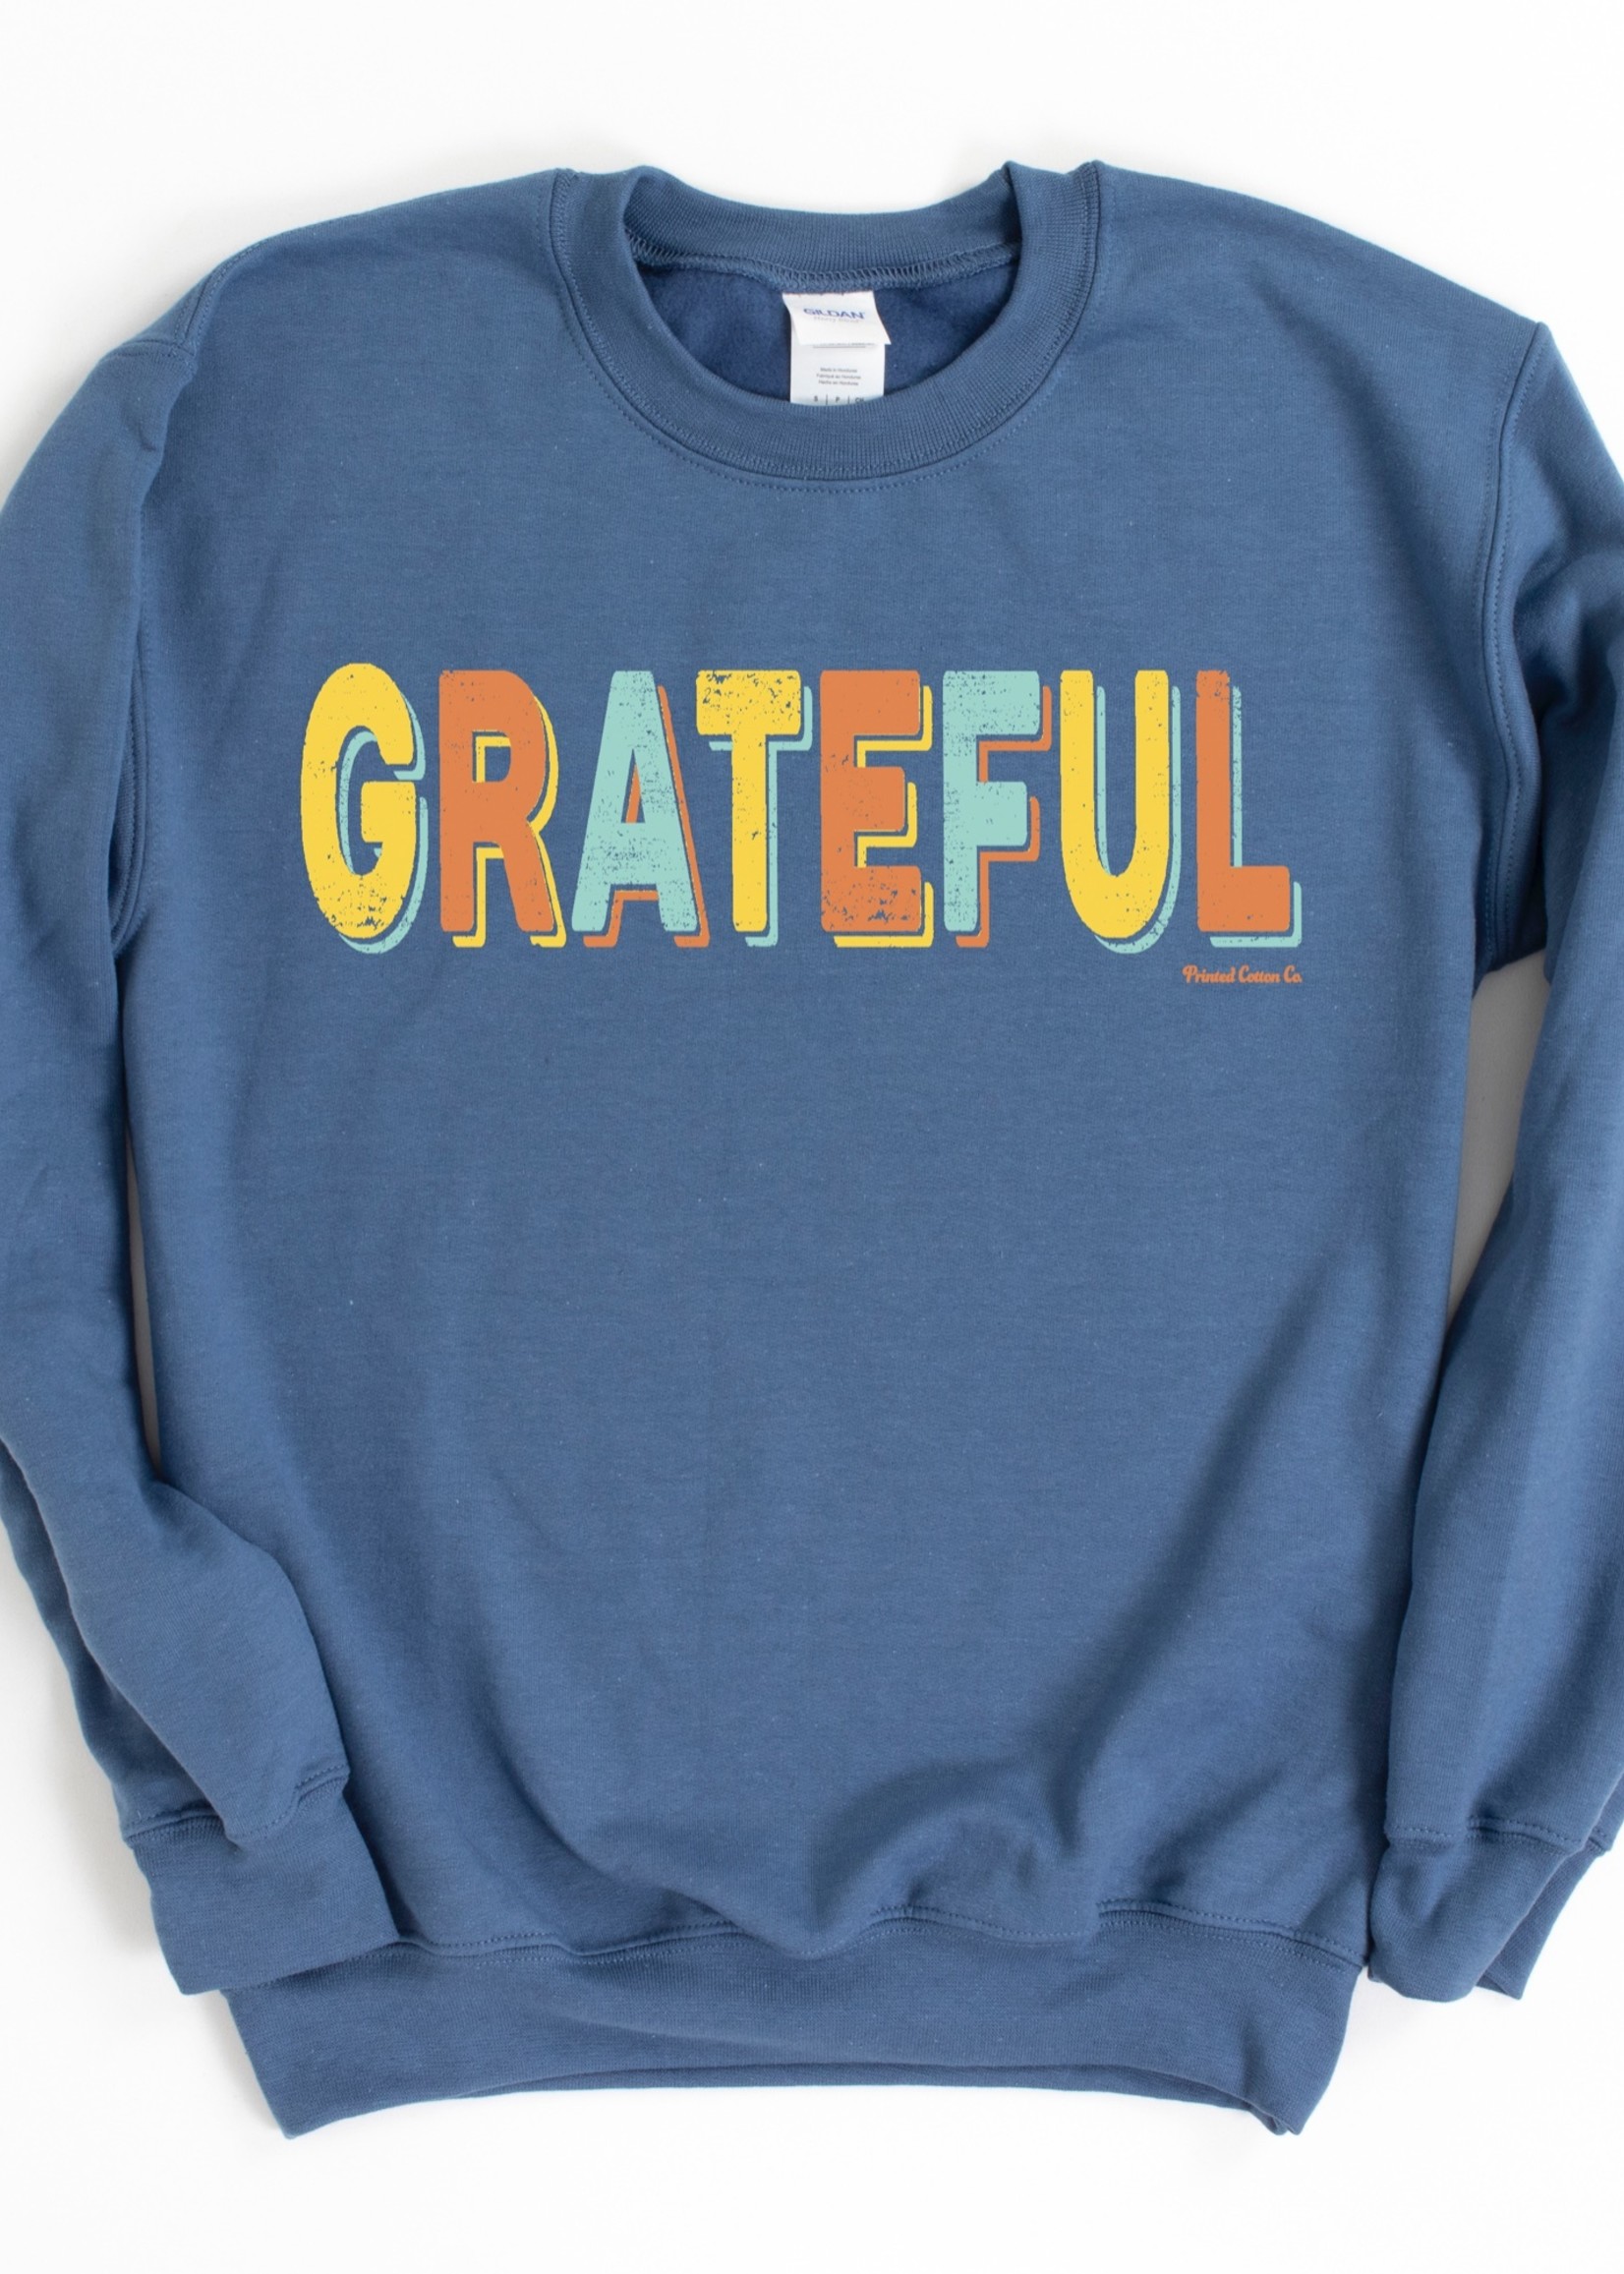 Fall Graphic Sweatshirts - Pumpkin Season or Grateful